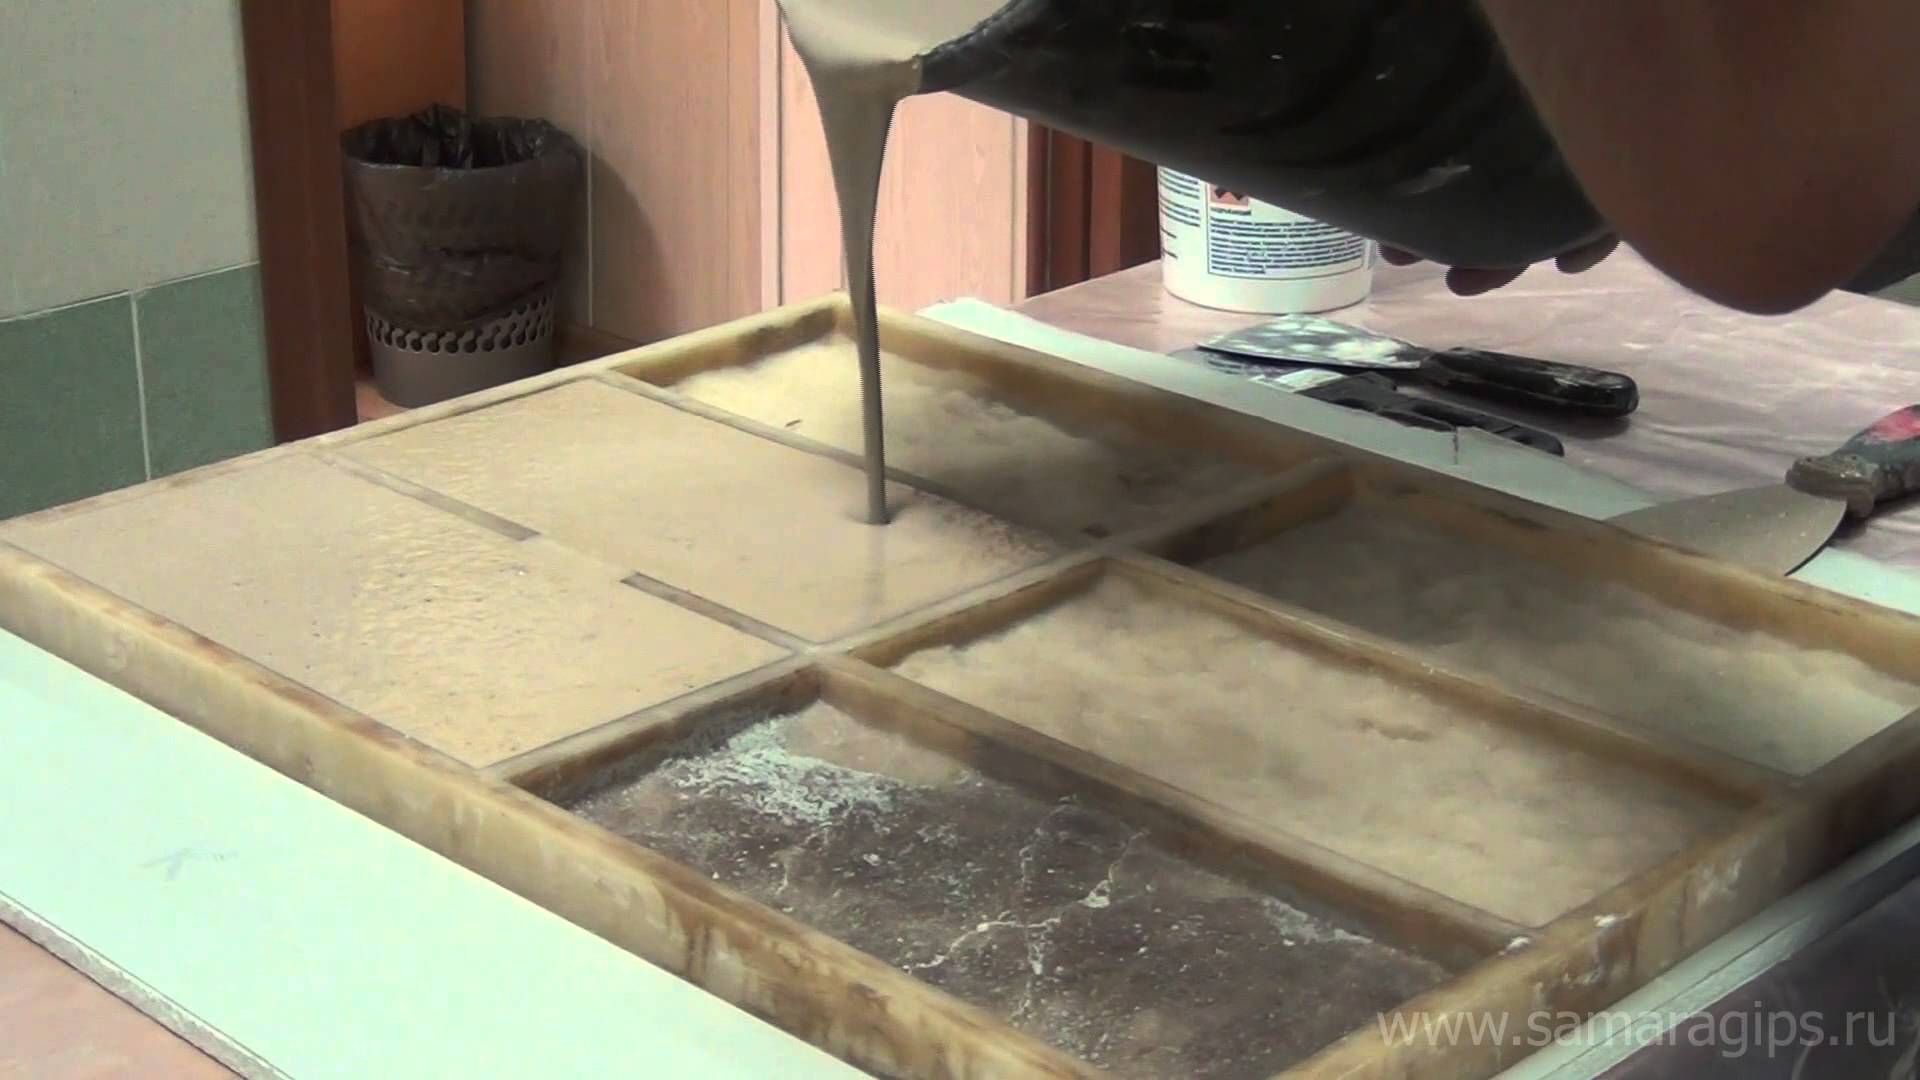 Технология литья жидкого камня